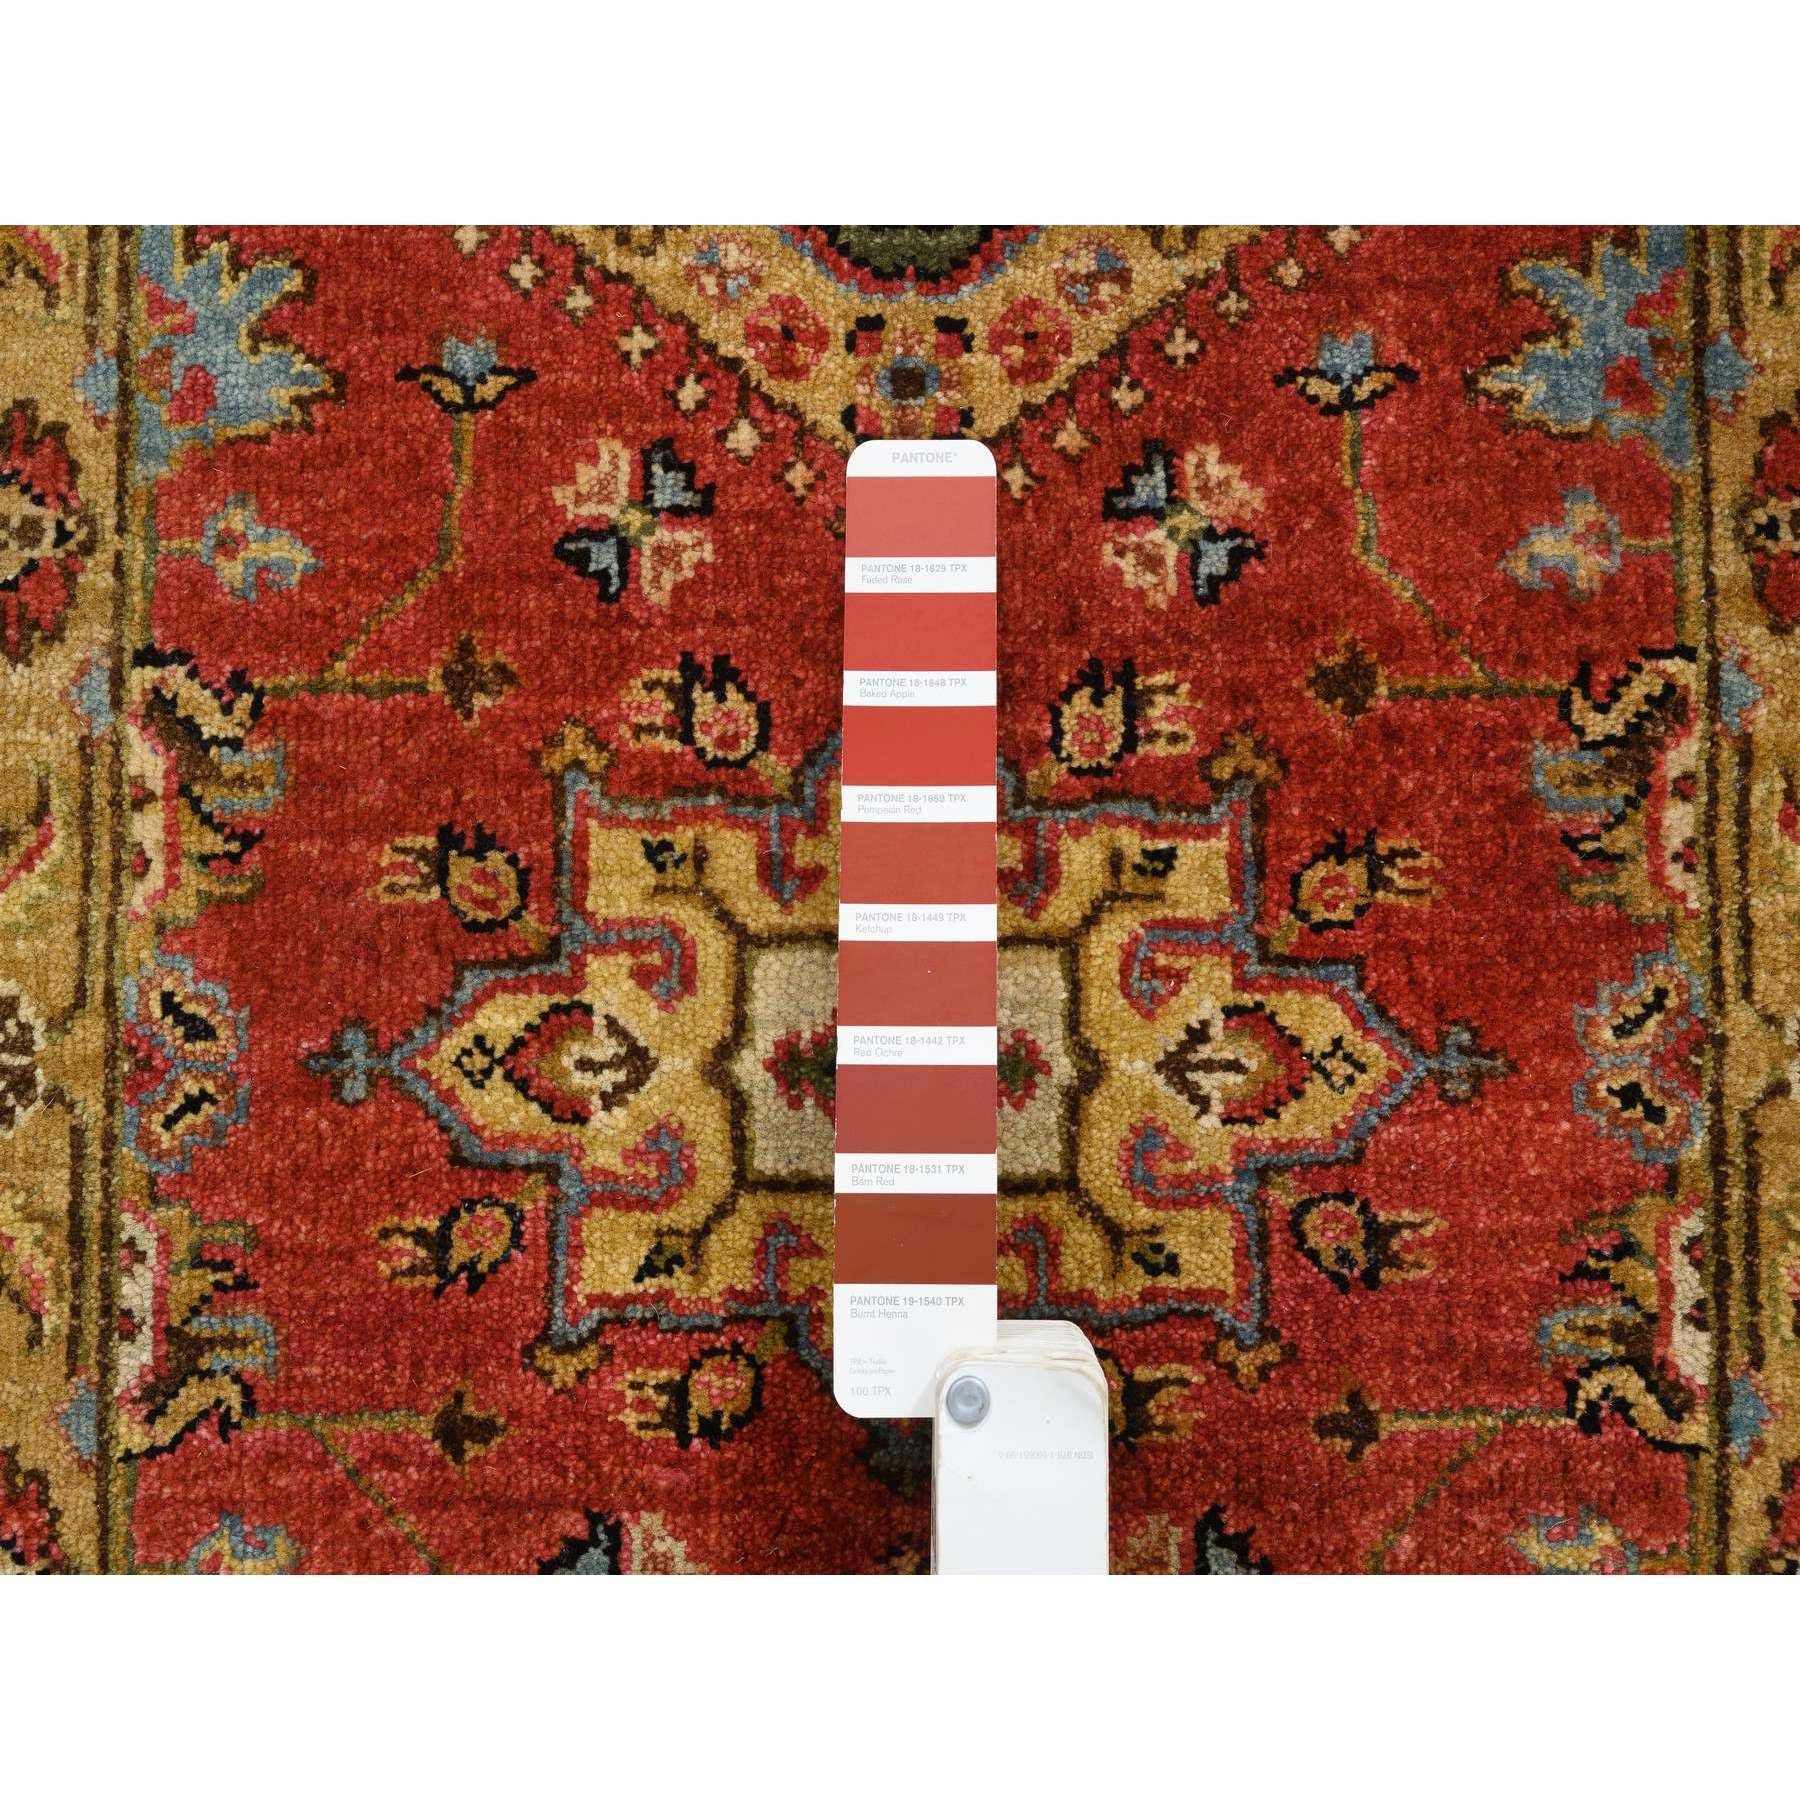 2'1"x3' Red-Gold, Organic Wool, Hand Woven, Karajeh Design with Geometric Medallions, Oriental Rug 